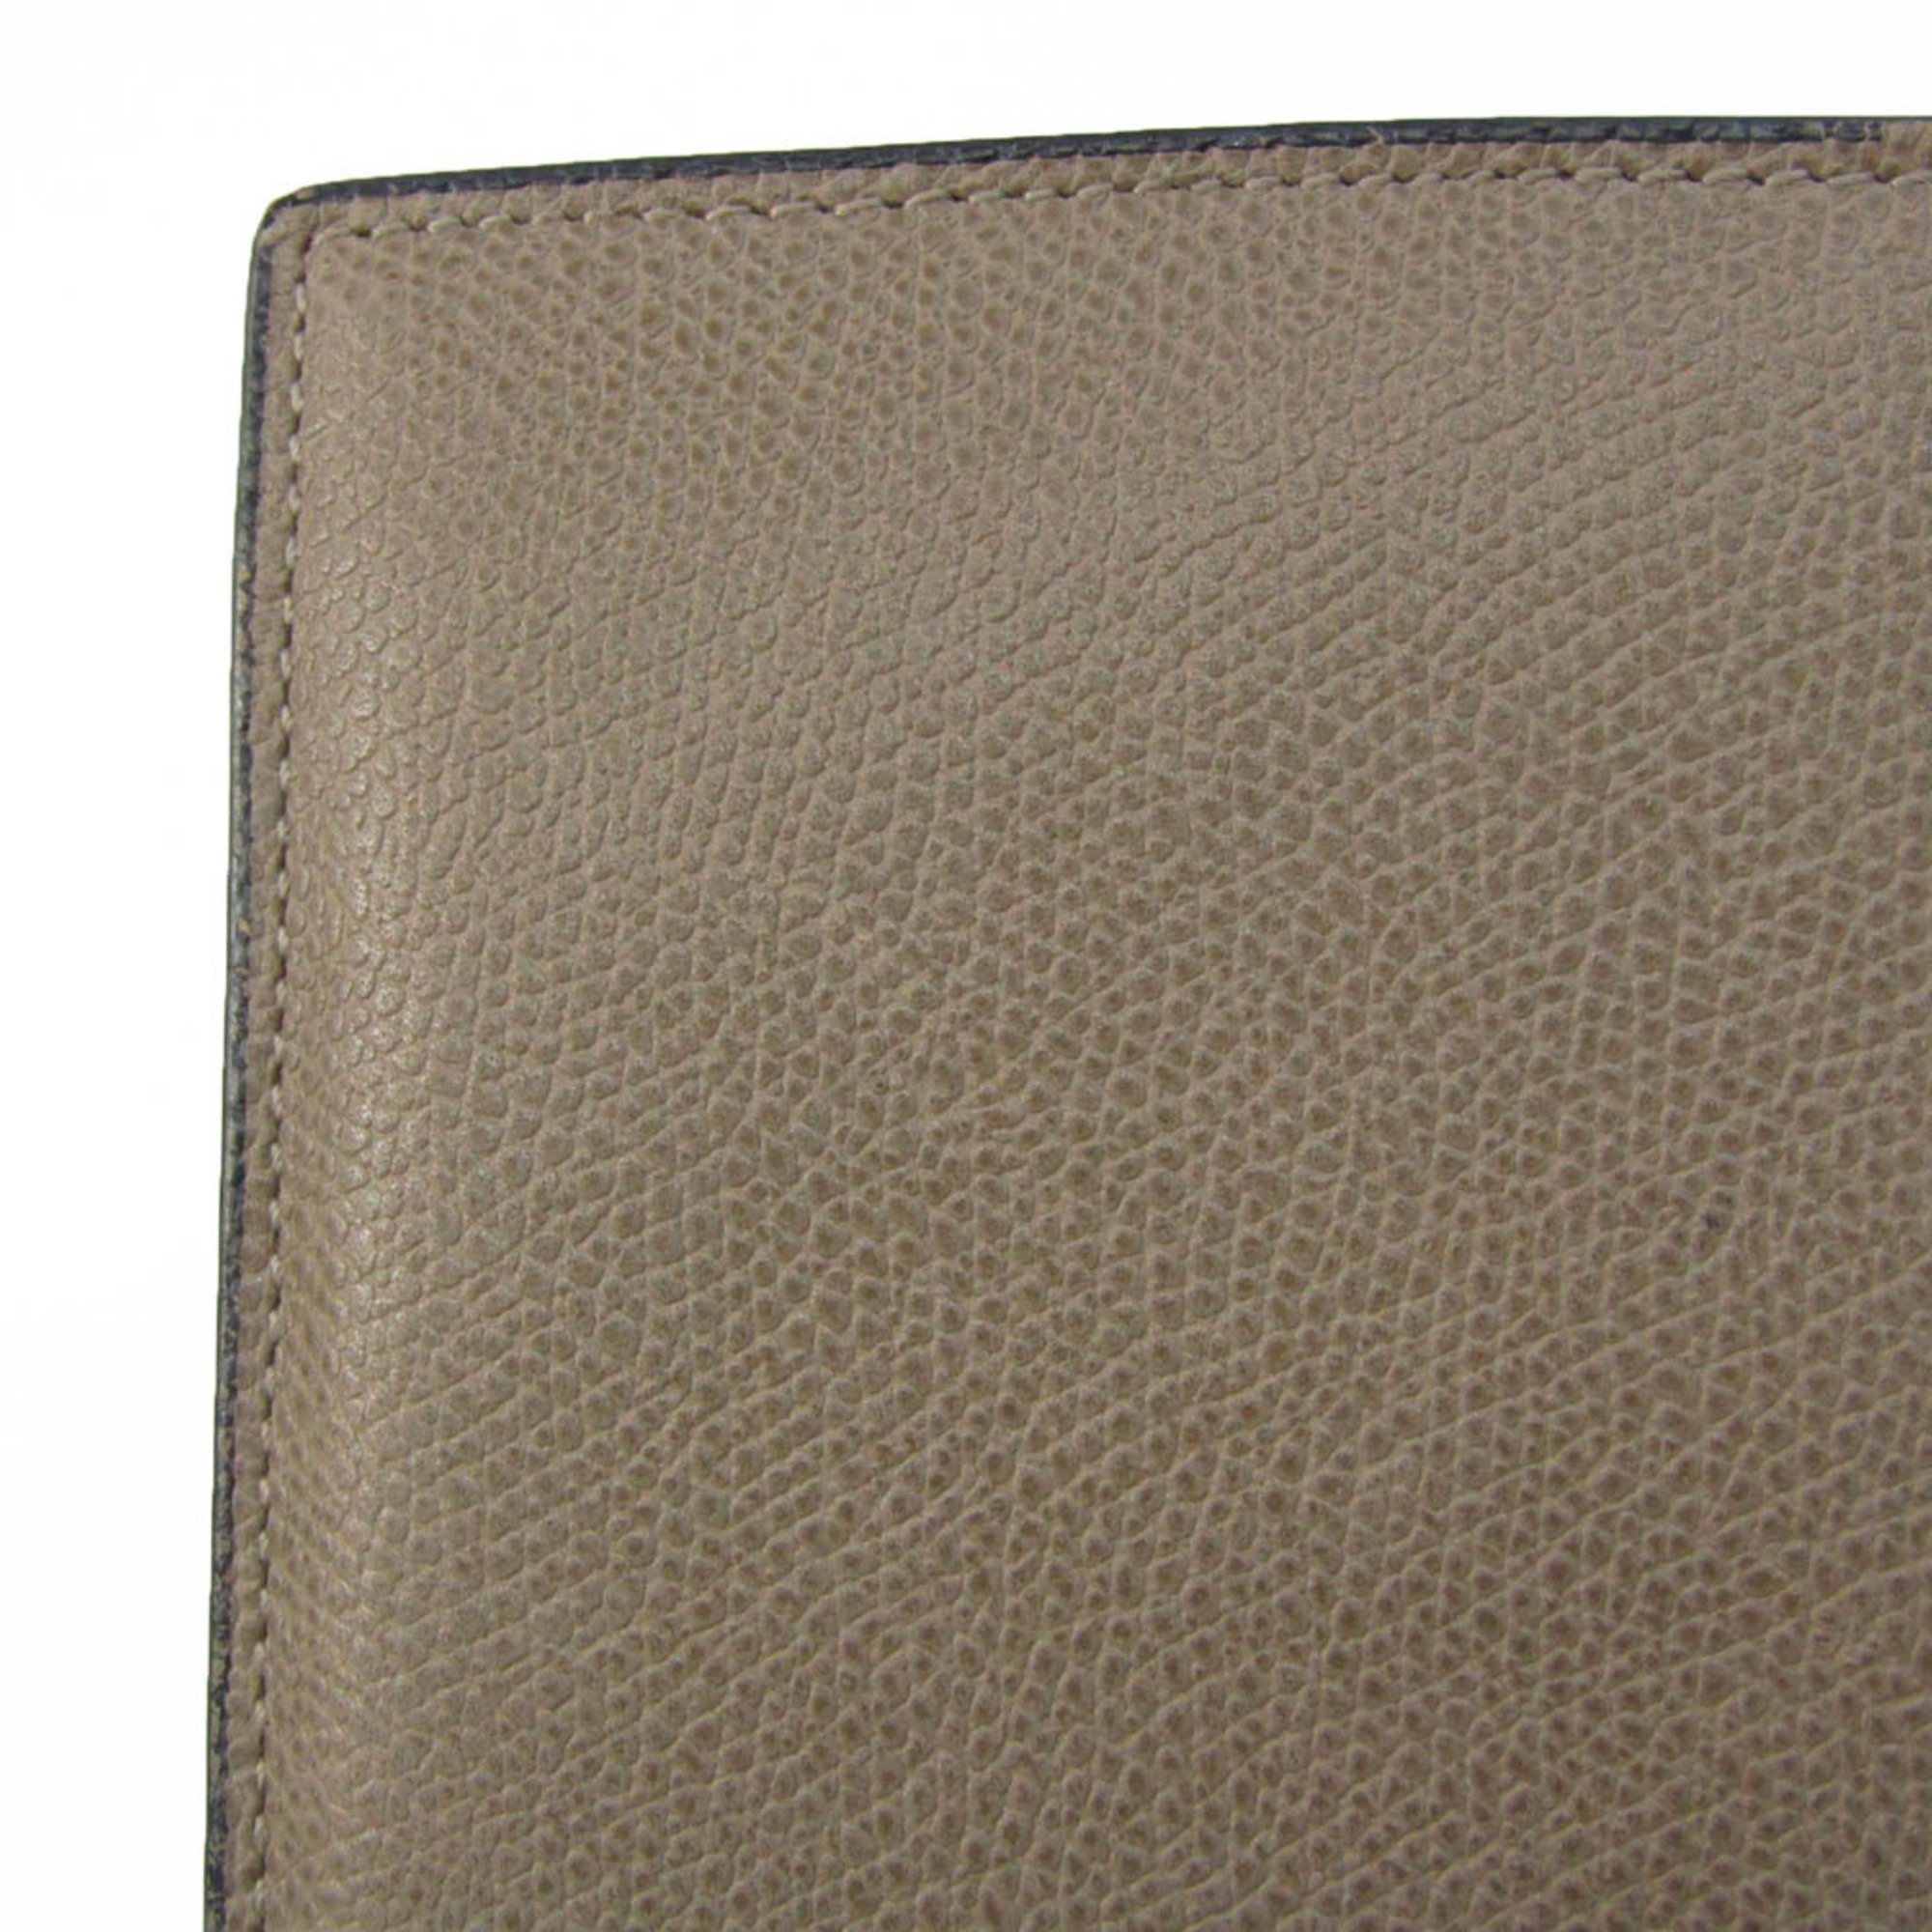 Valextra Vertical 12 Card V8L21 Men,Women Leather Long Bill Wallet (bi-fold) Beige